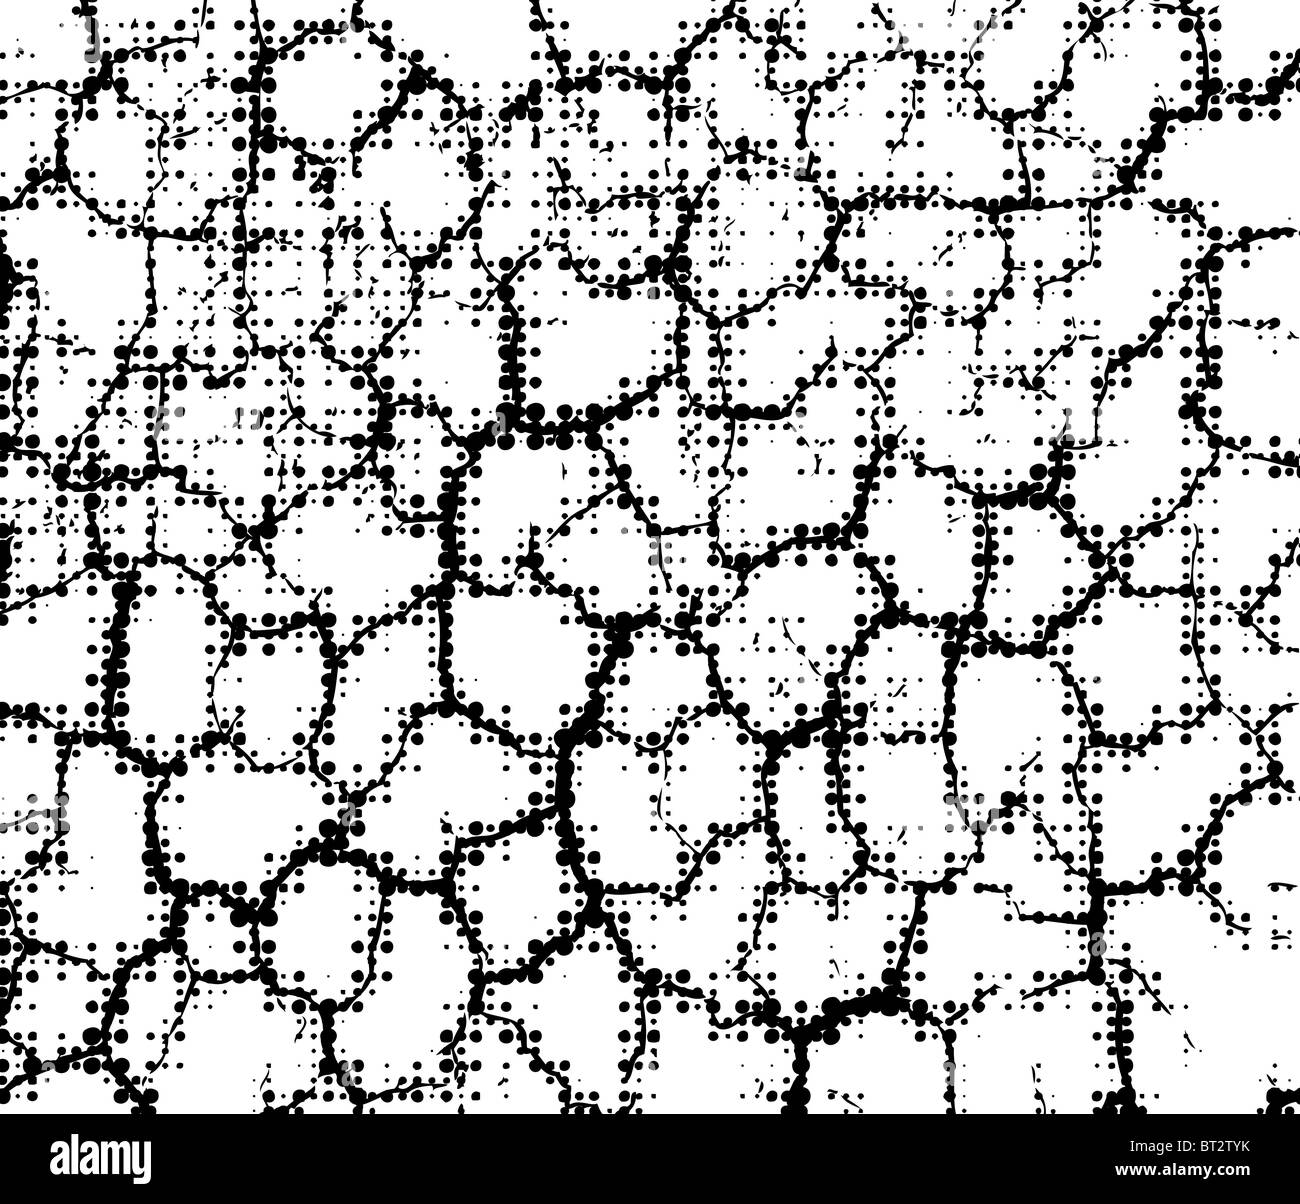 Background illustration of grunge dots and cracks Stock Photo